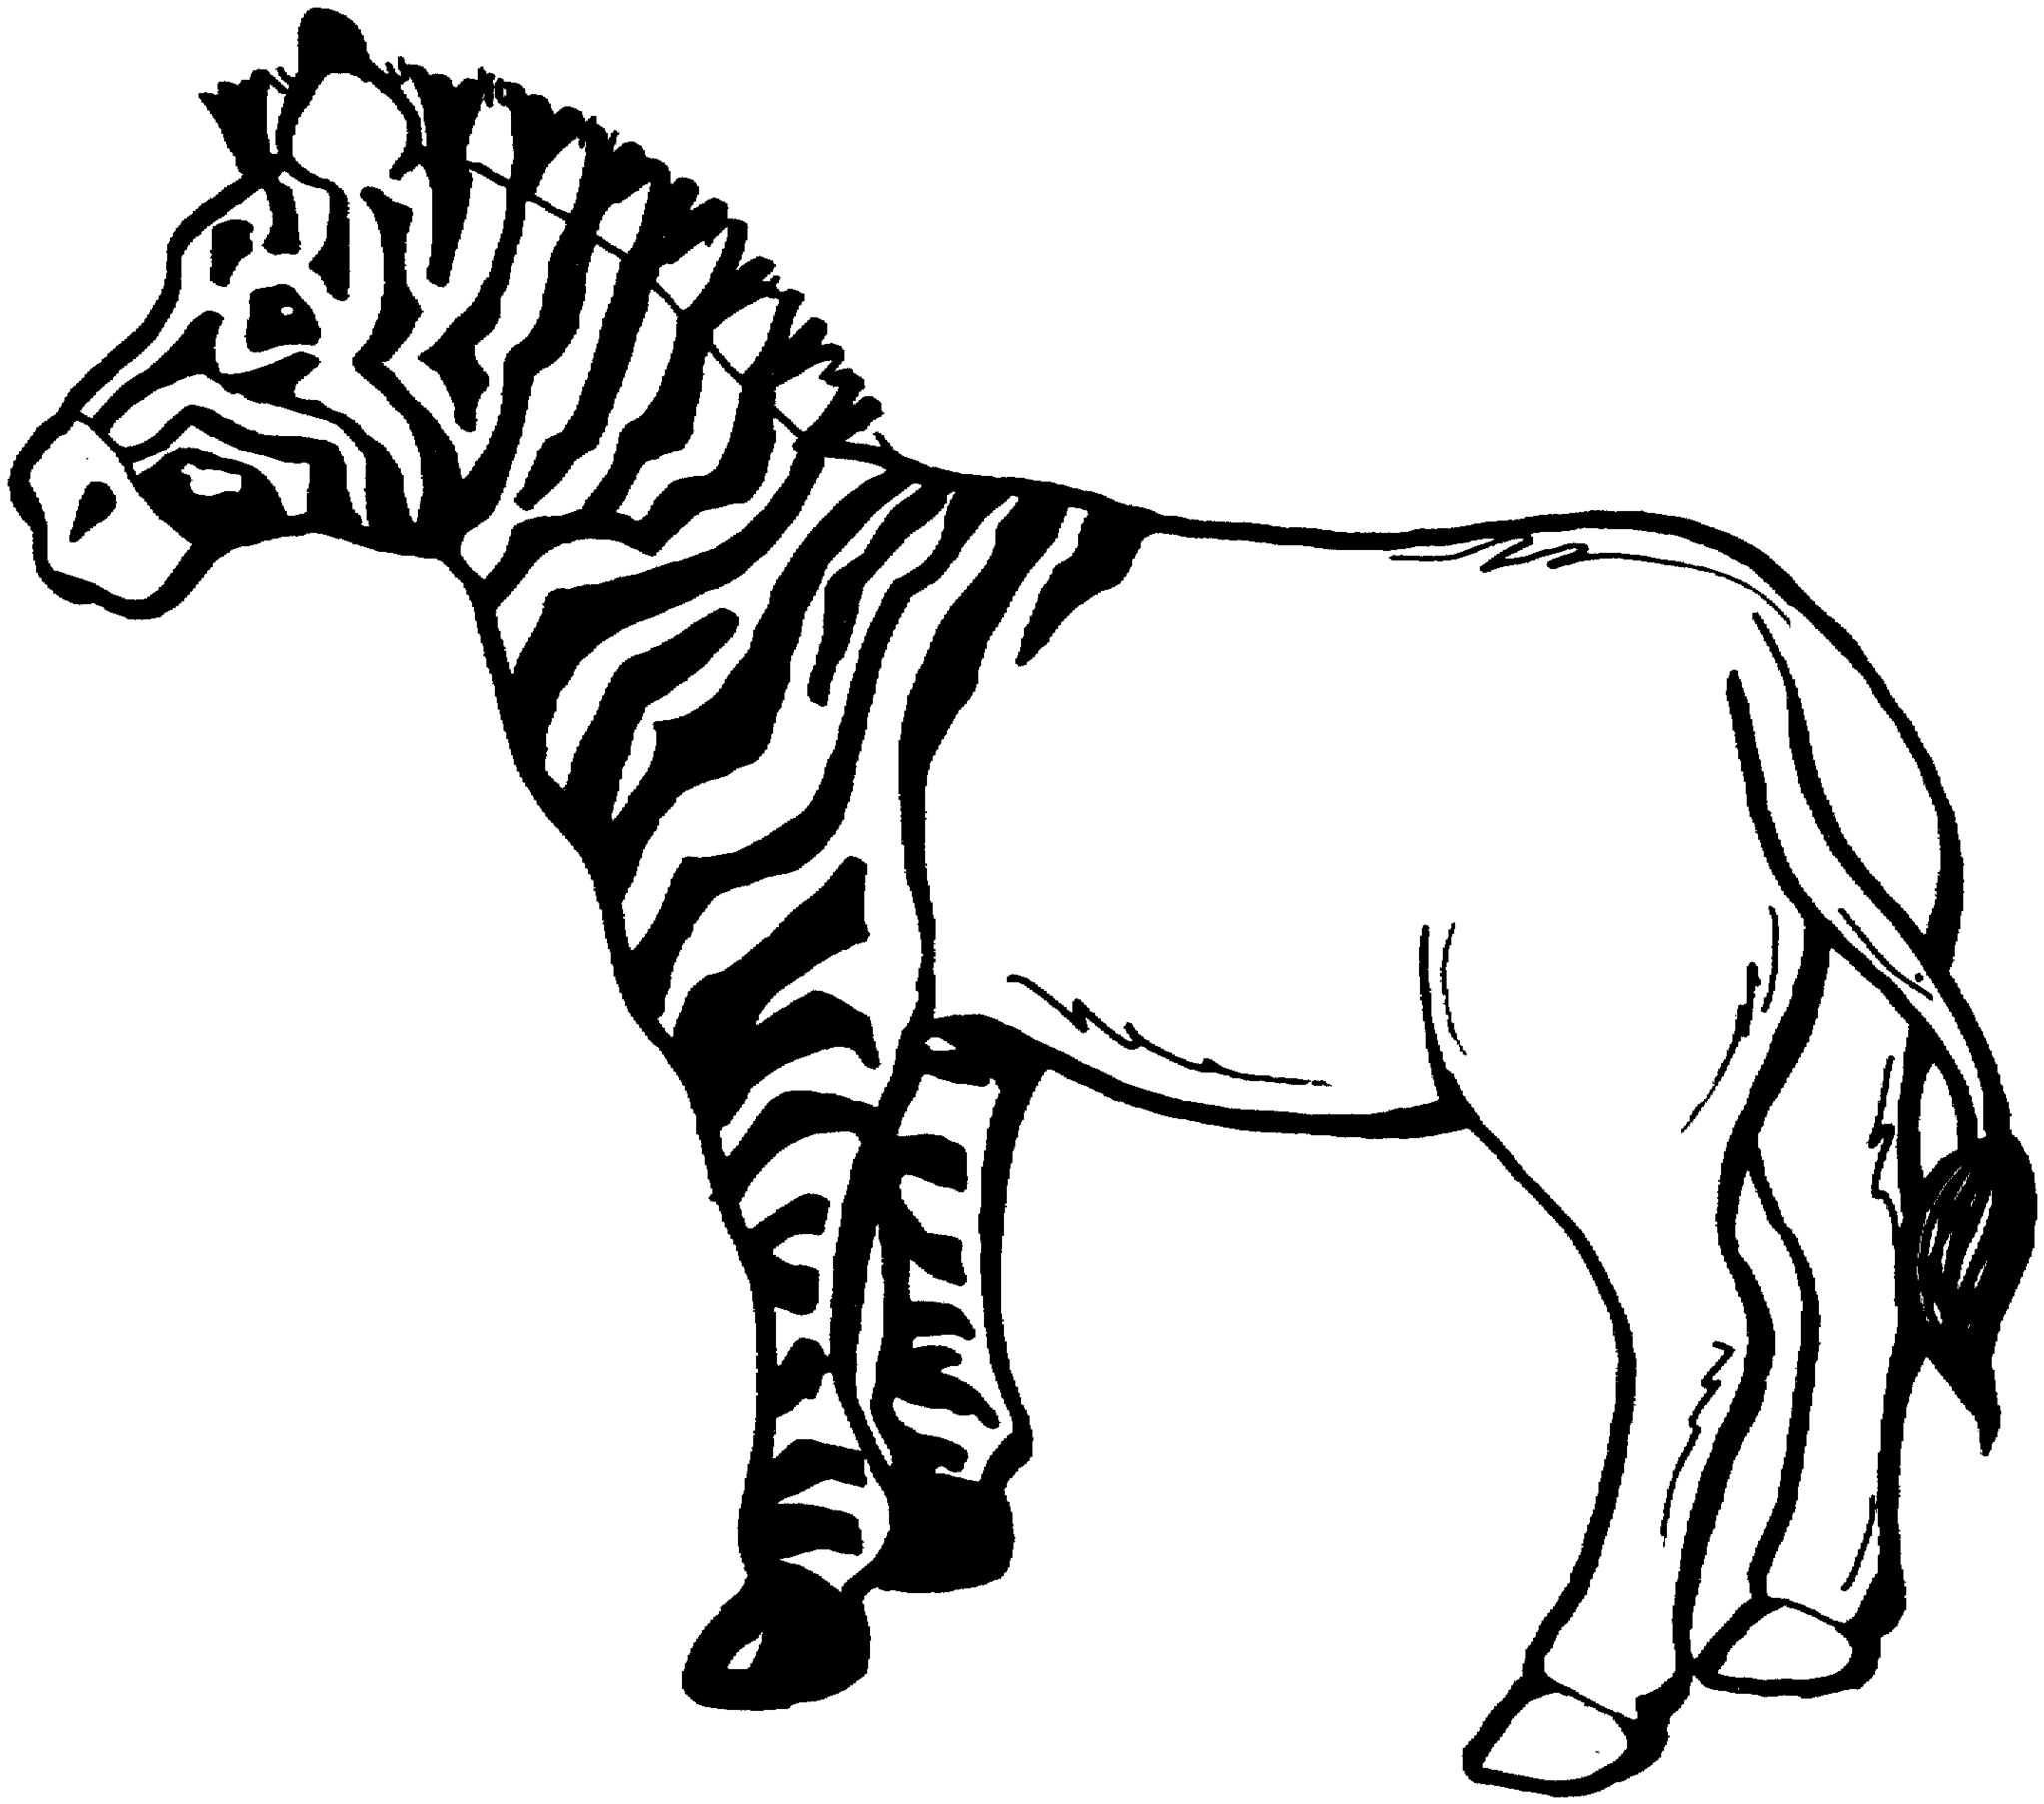 Zebra line drawing.